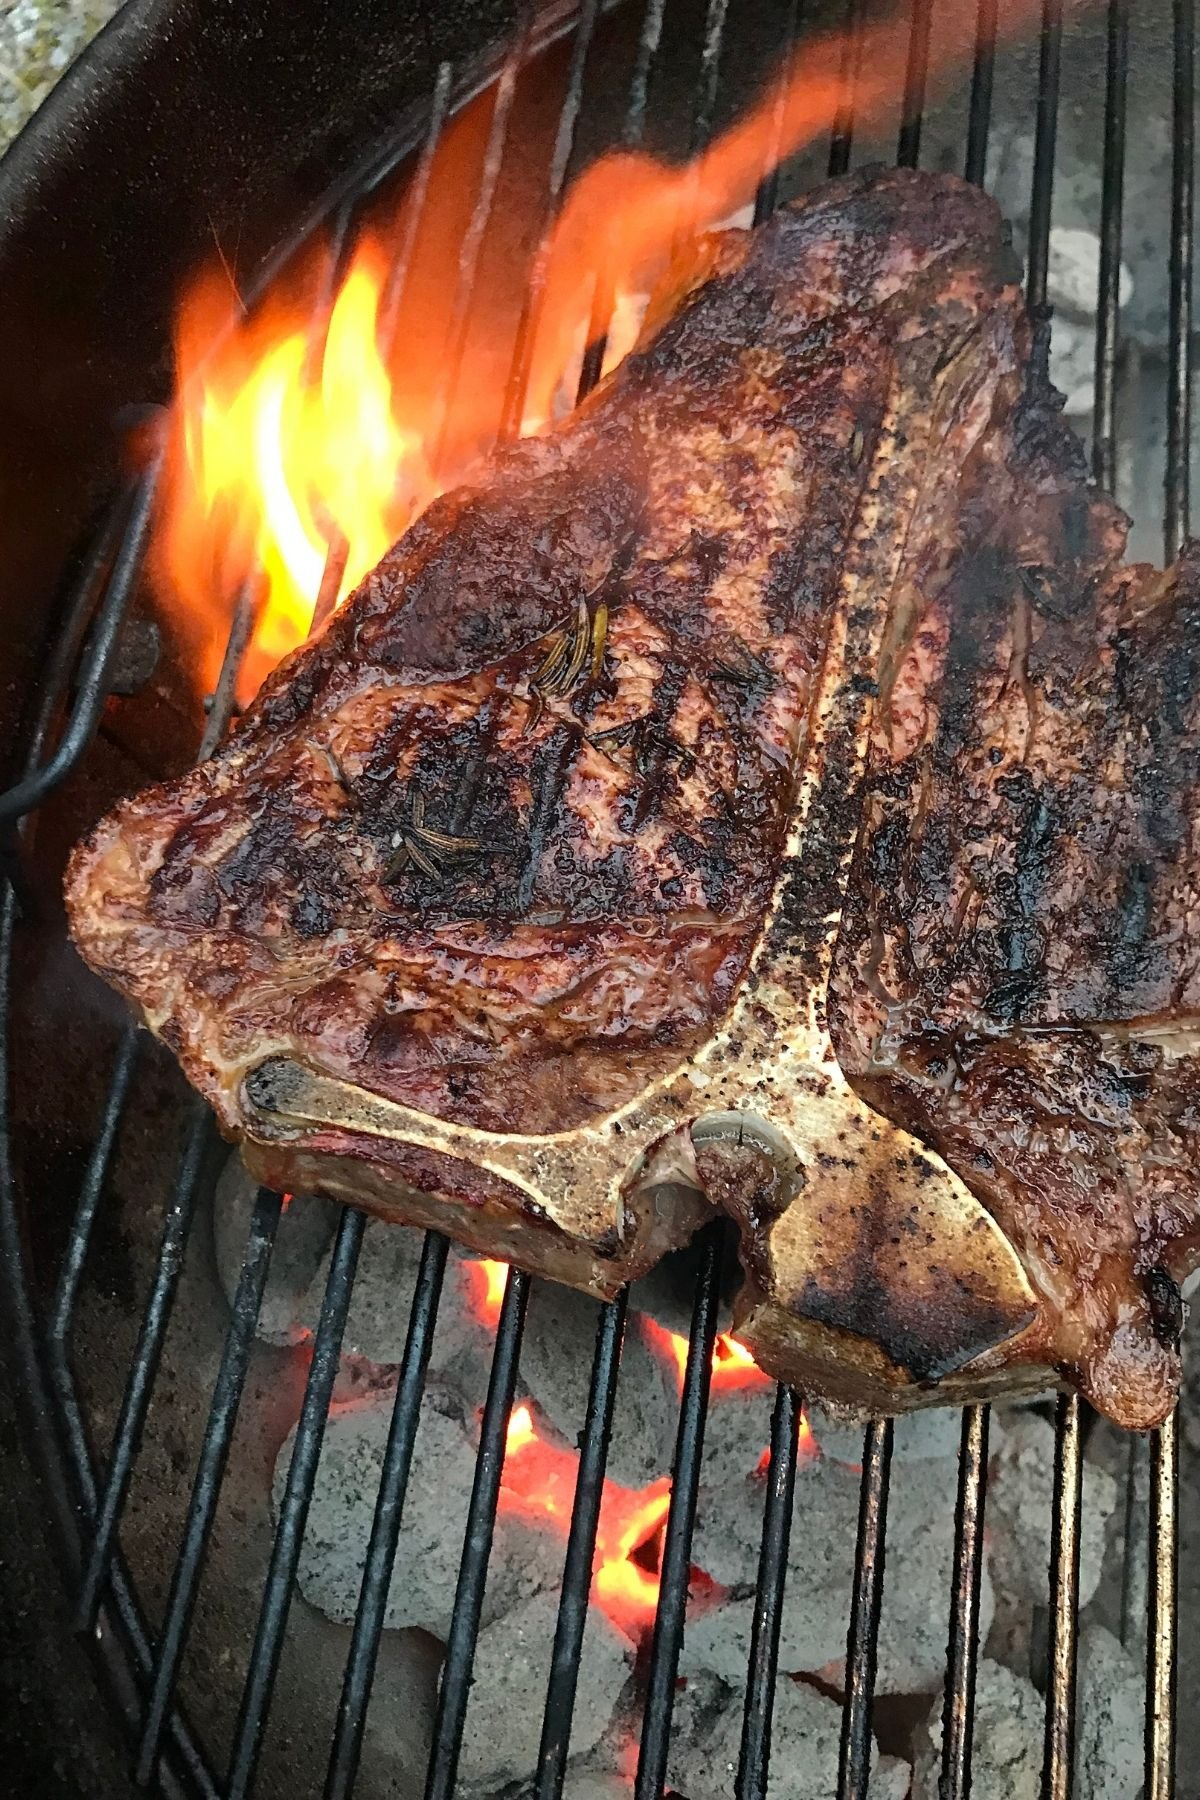 porterhouse steak on the grill